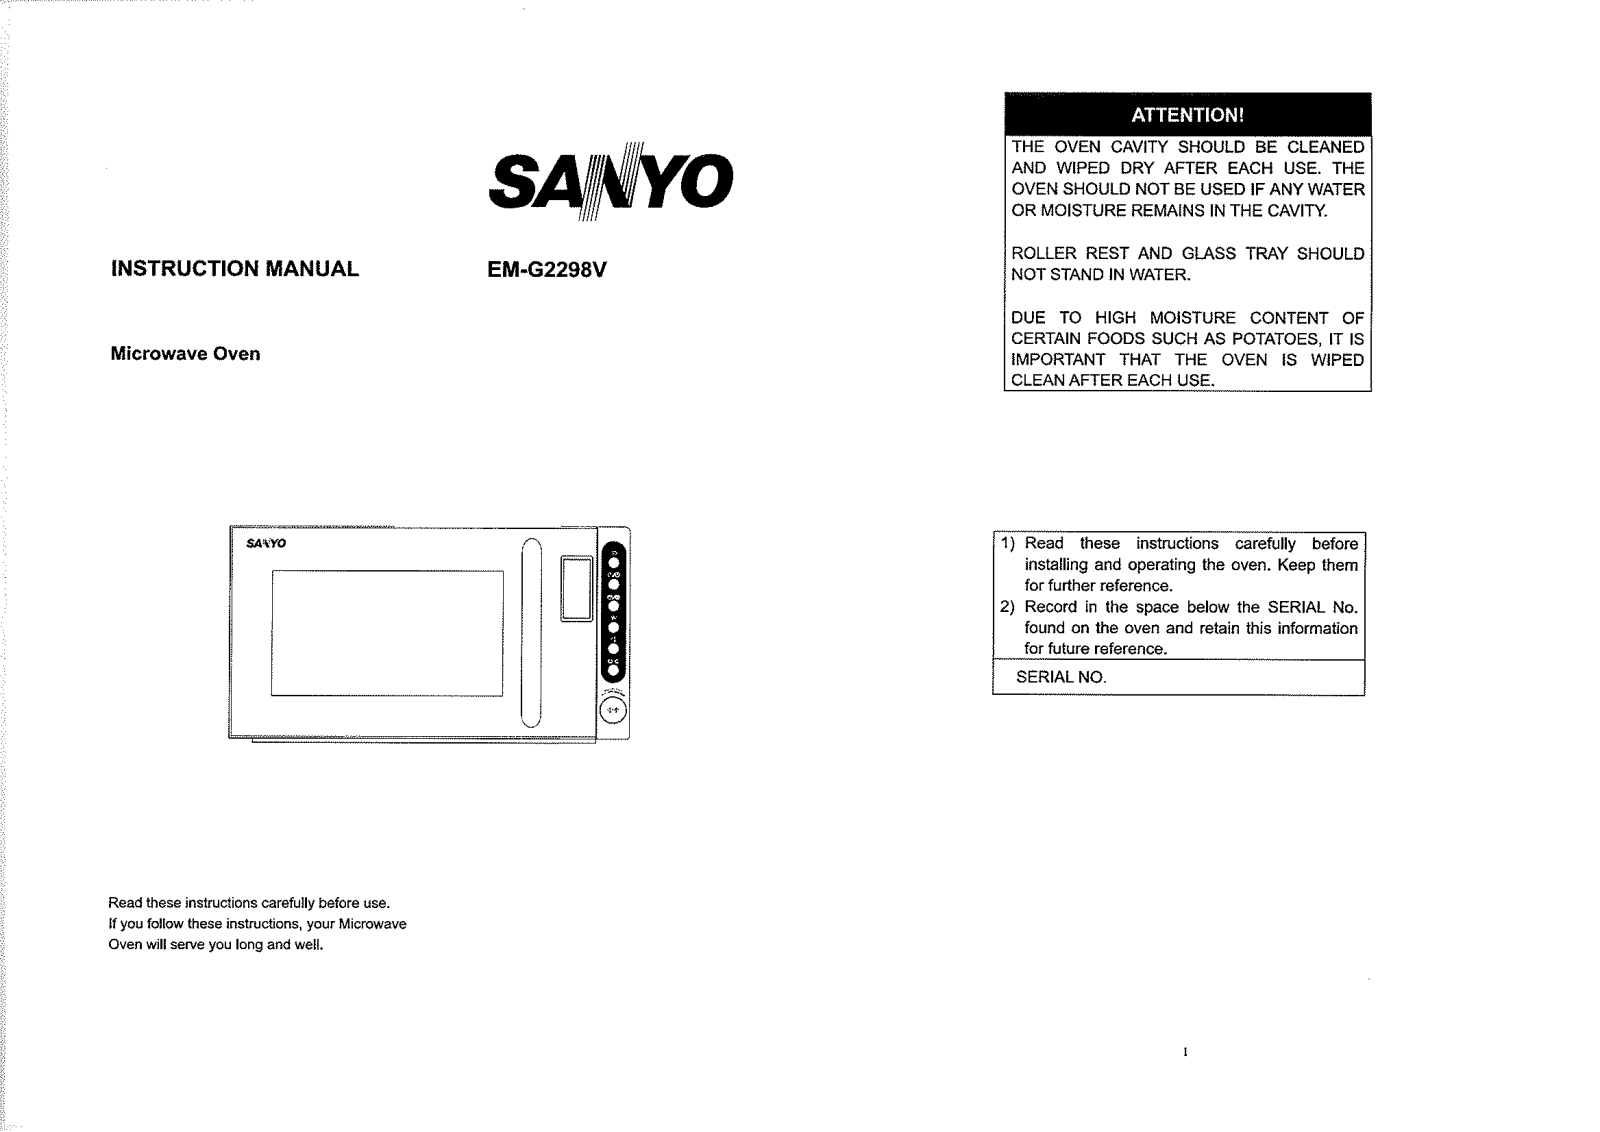 Sanyo EM-G2298V Instruction Manual